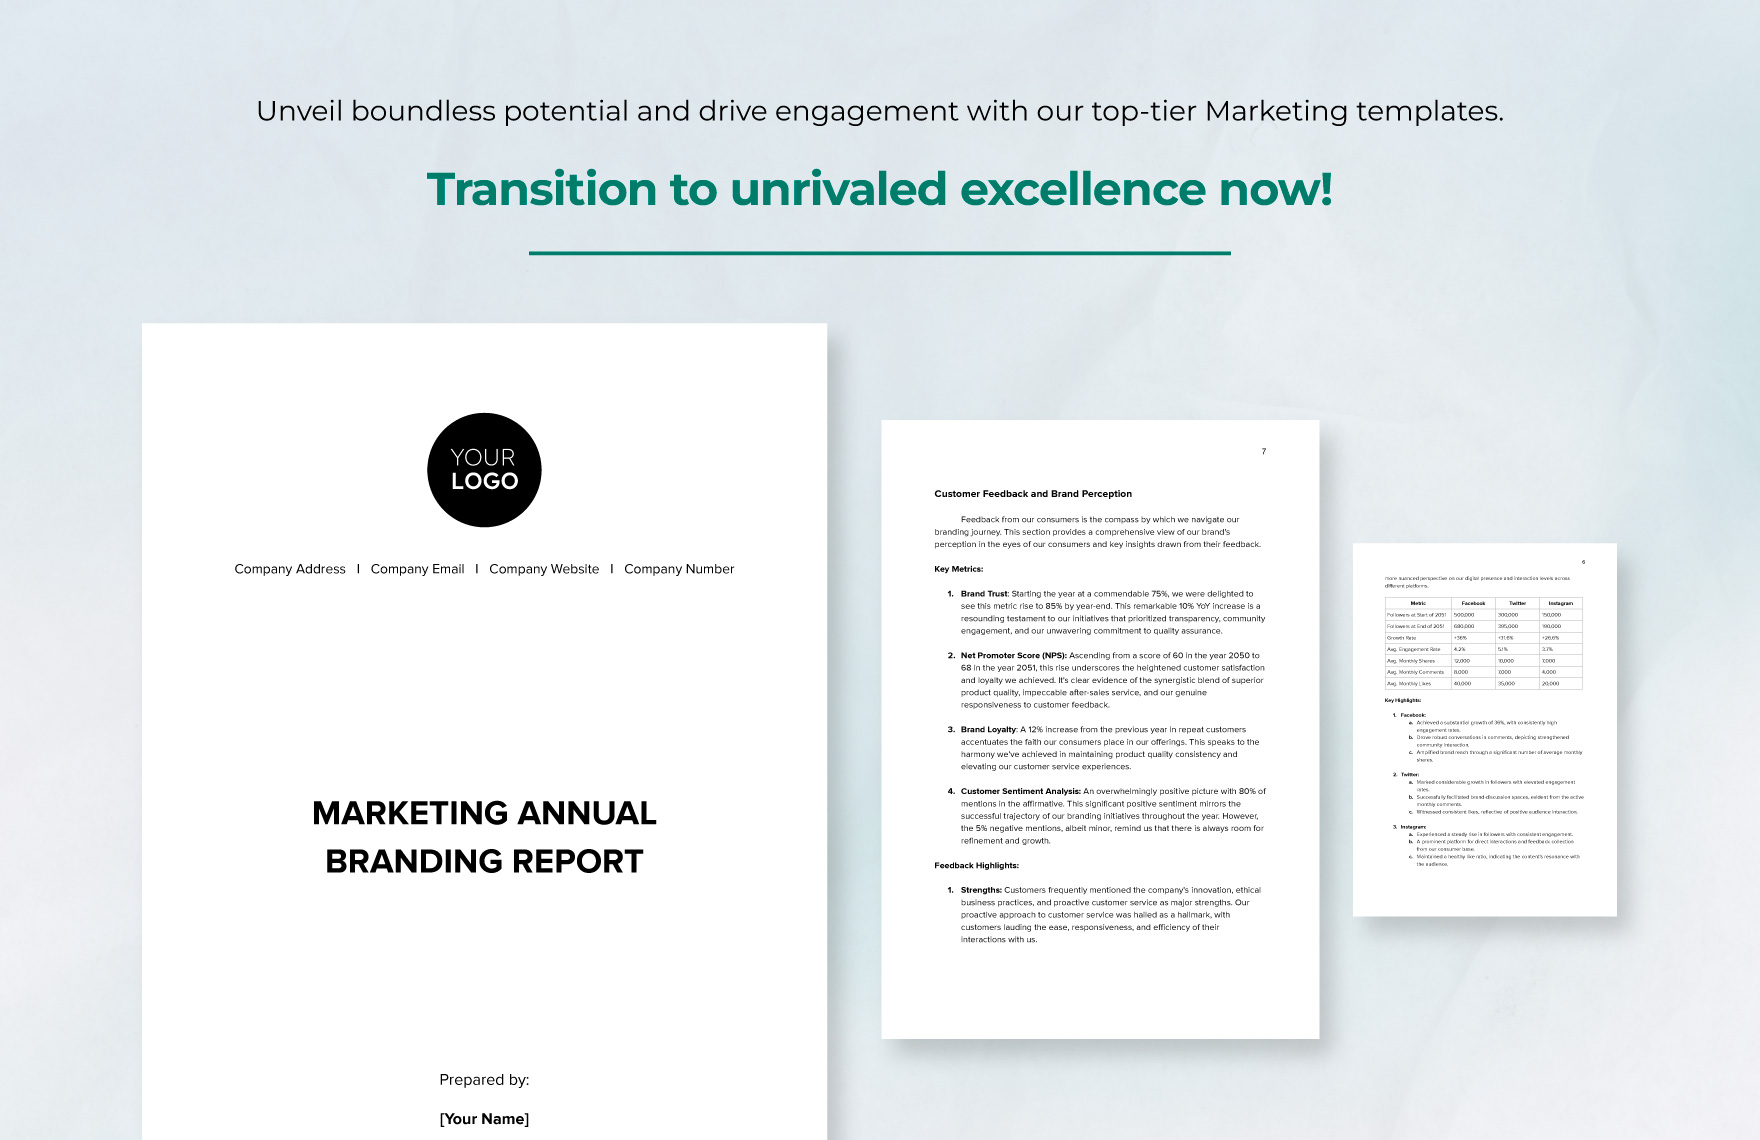 Marketing Annual Branding Report Template